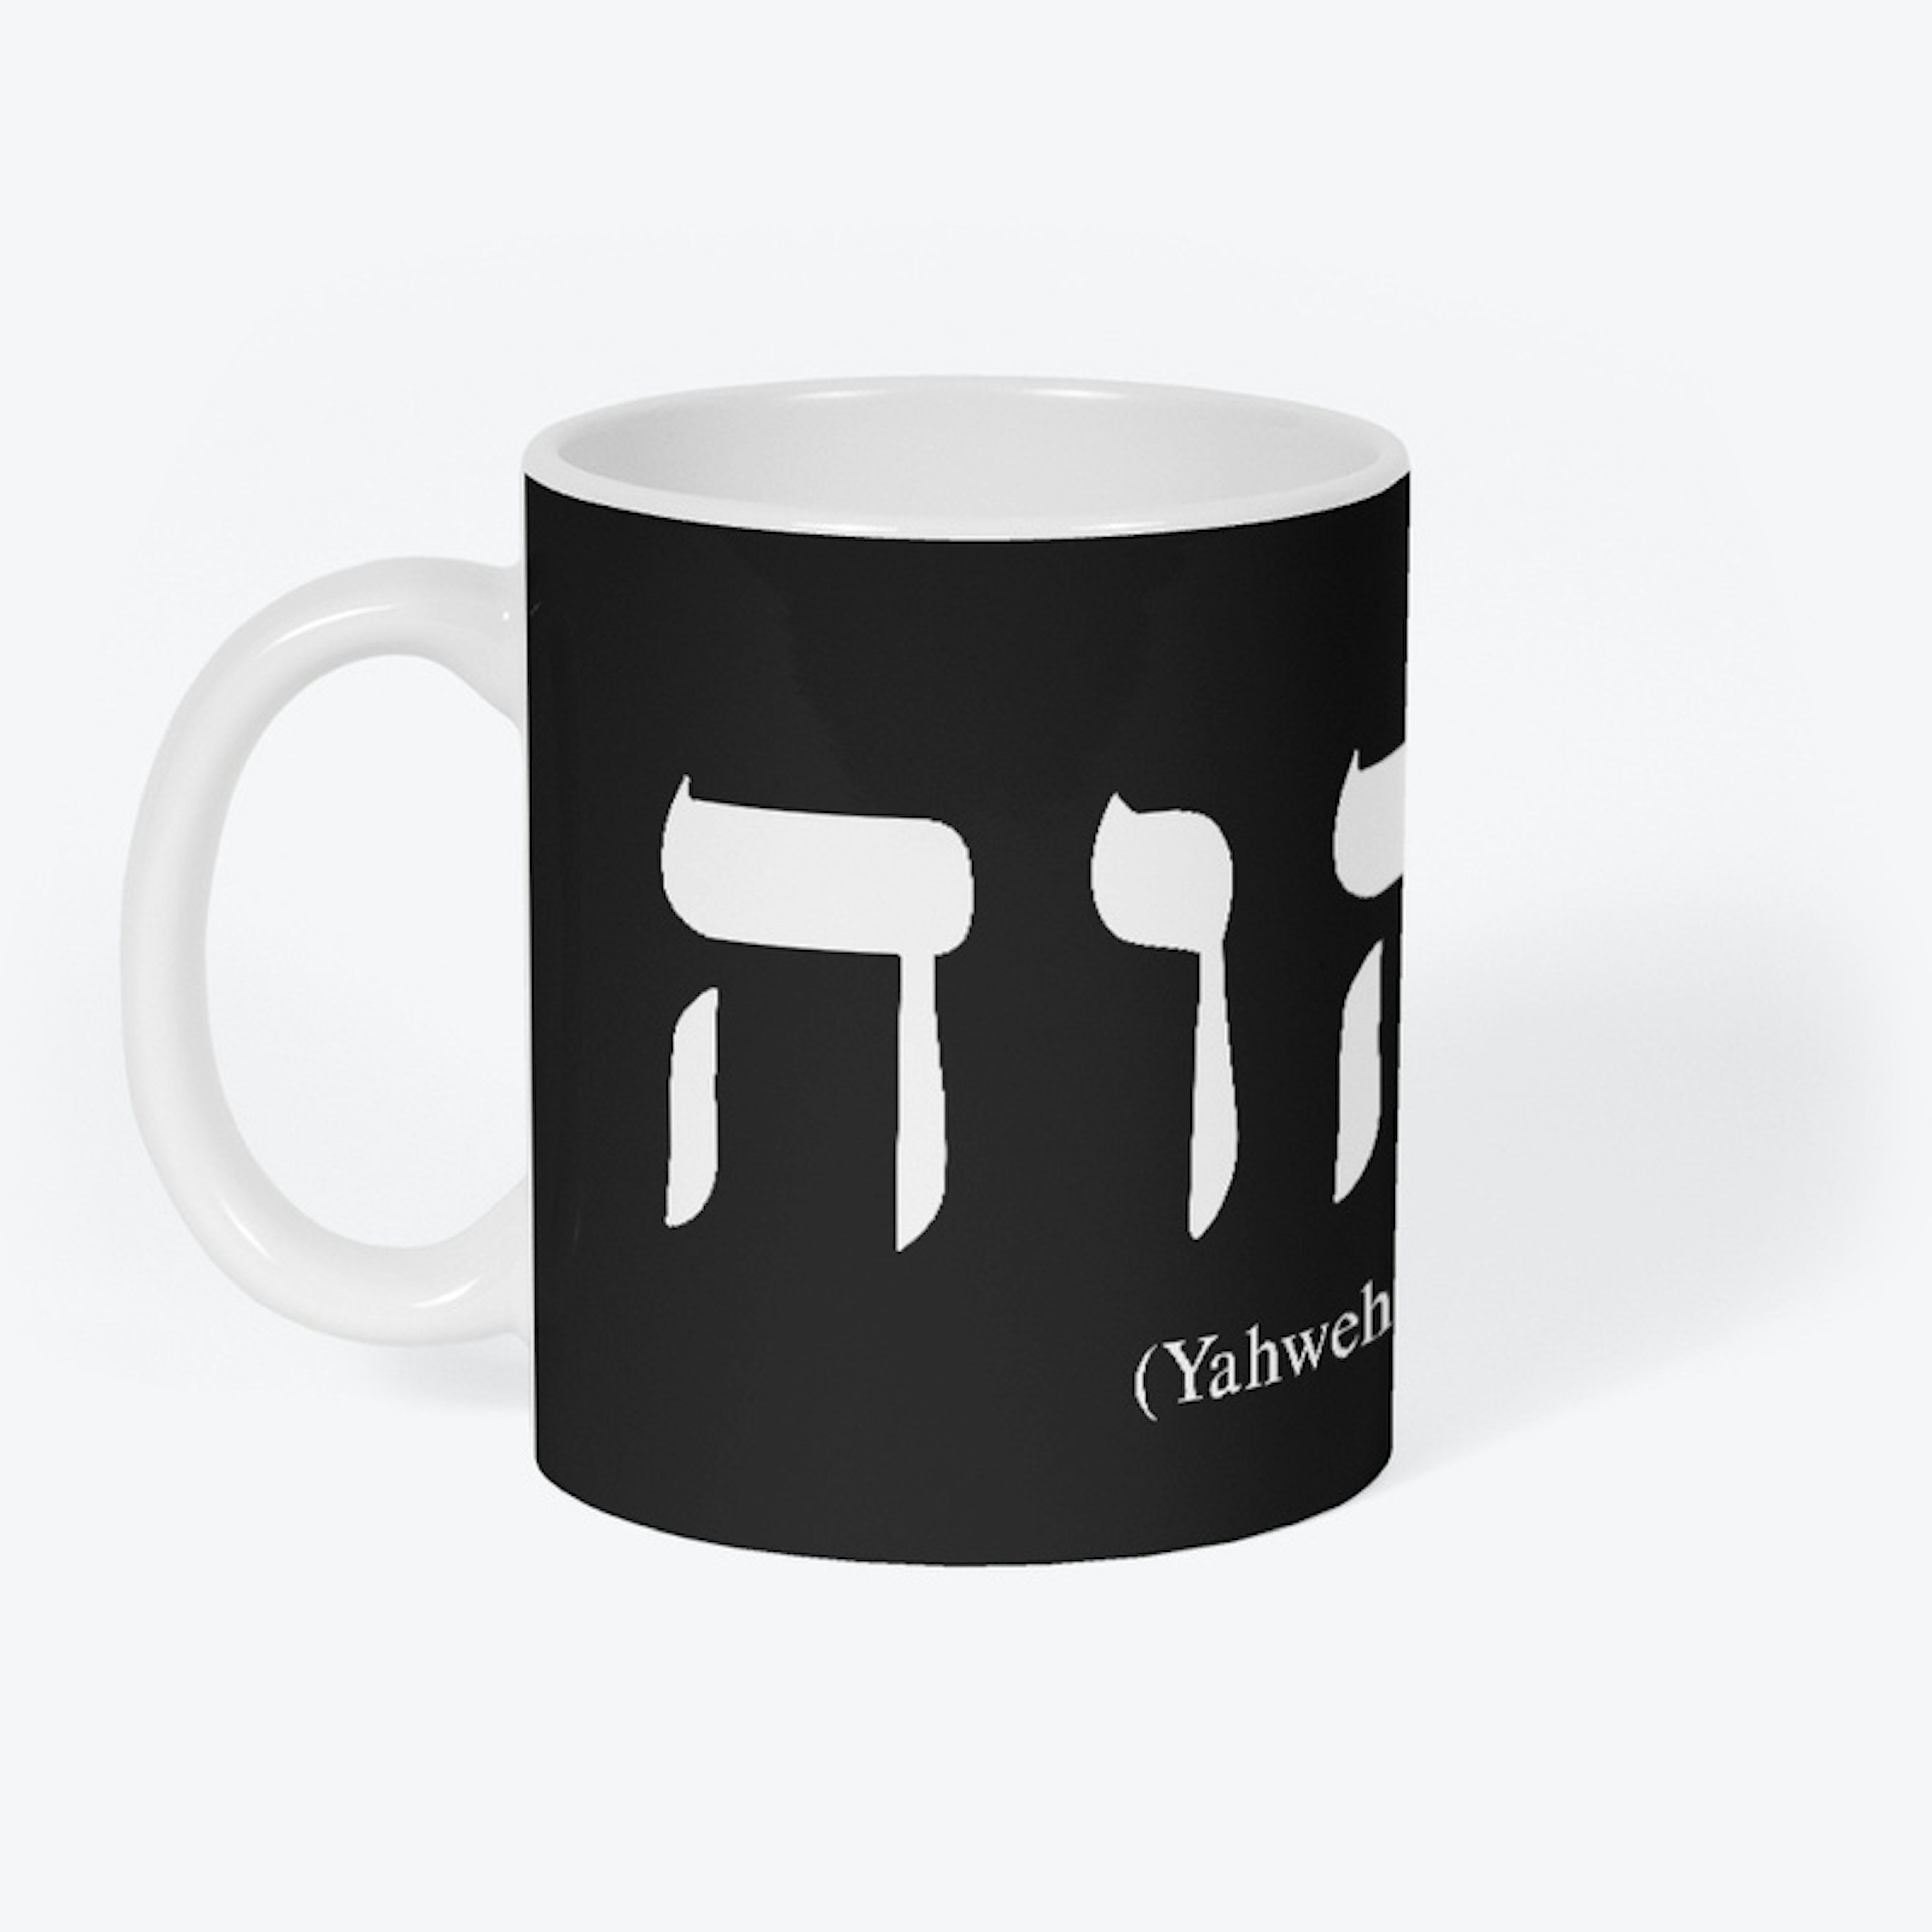 "Yahweh" Line (light)